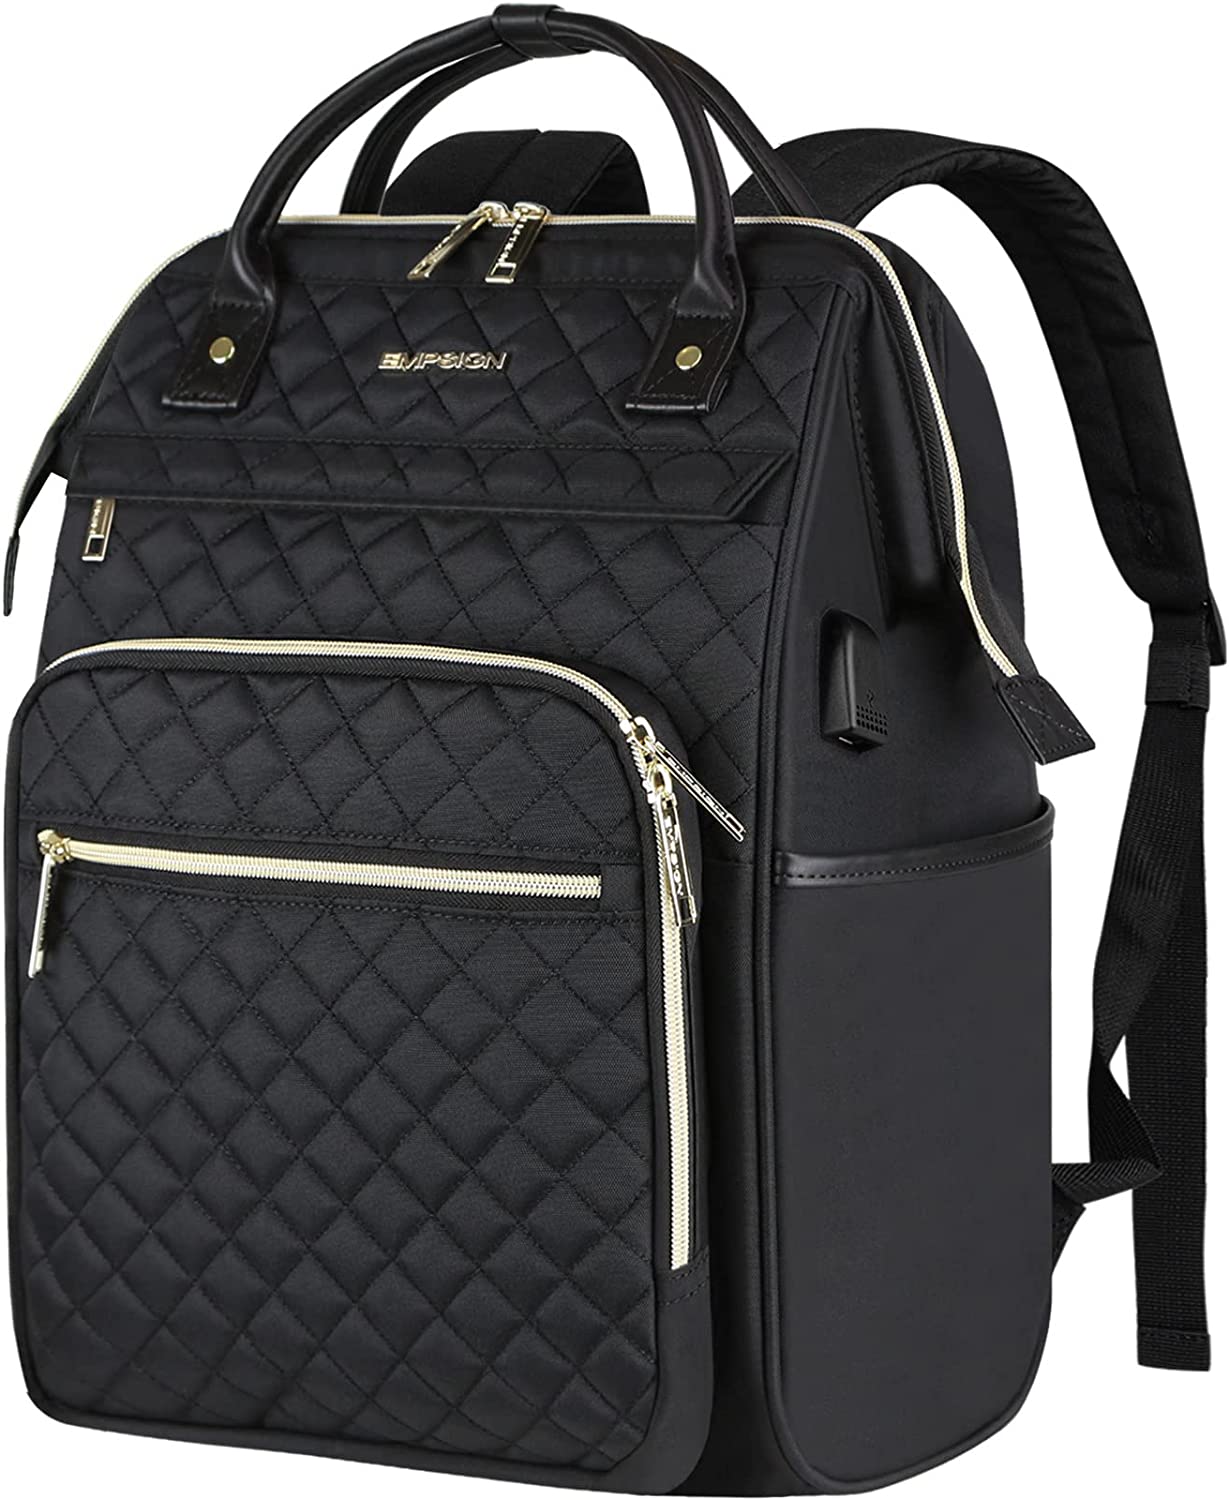 EMPSIGN Laptop Backpack for Women 17 Inch Travel [...]